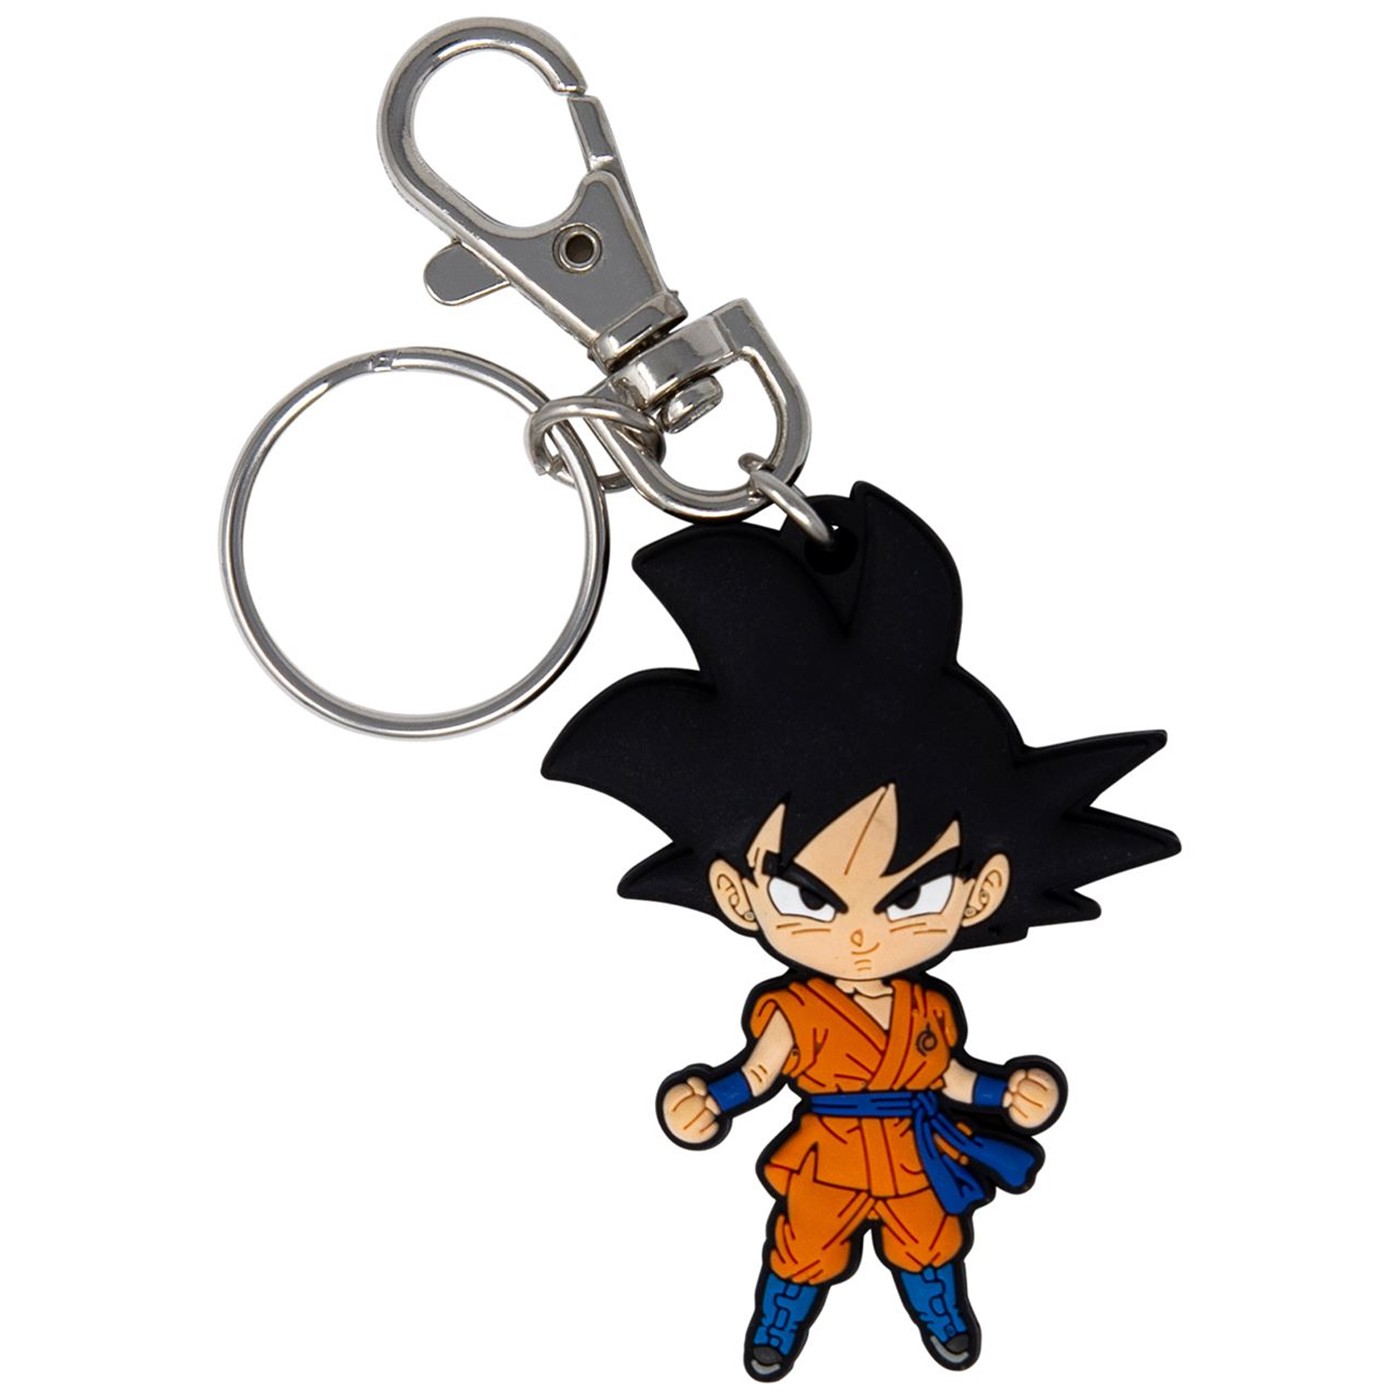 Details about   Dragon Ball Z Son Goku Super PVC Keychain Pendant Ornament Decoration 